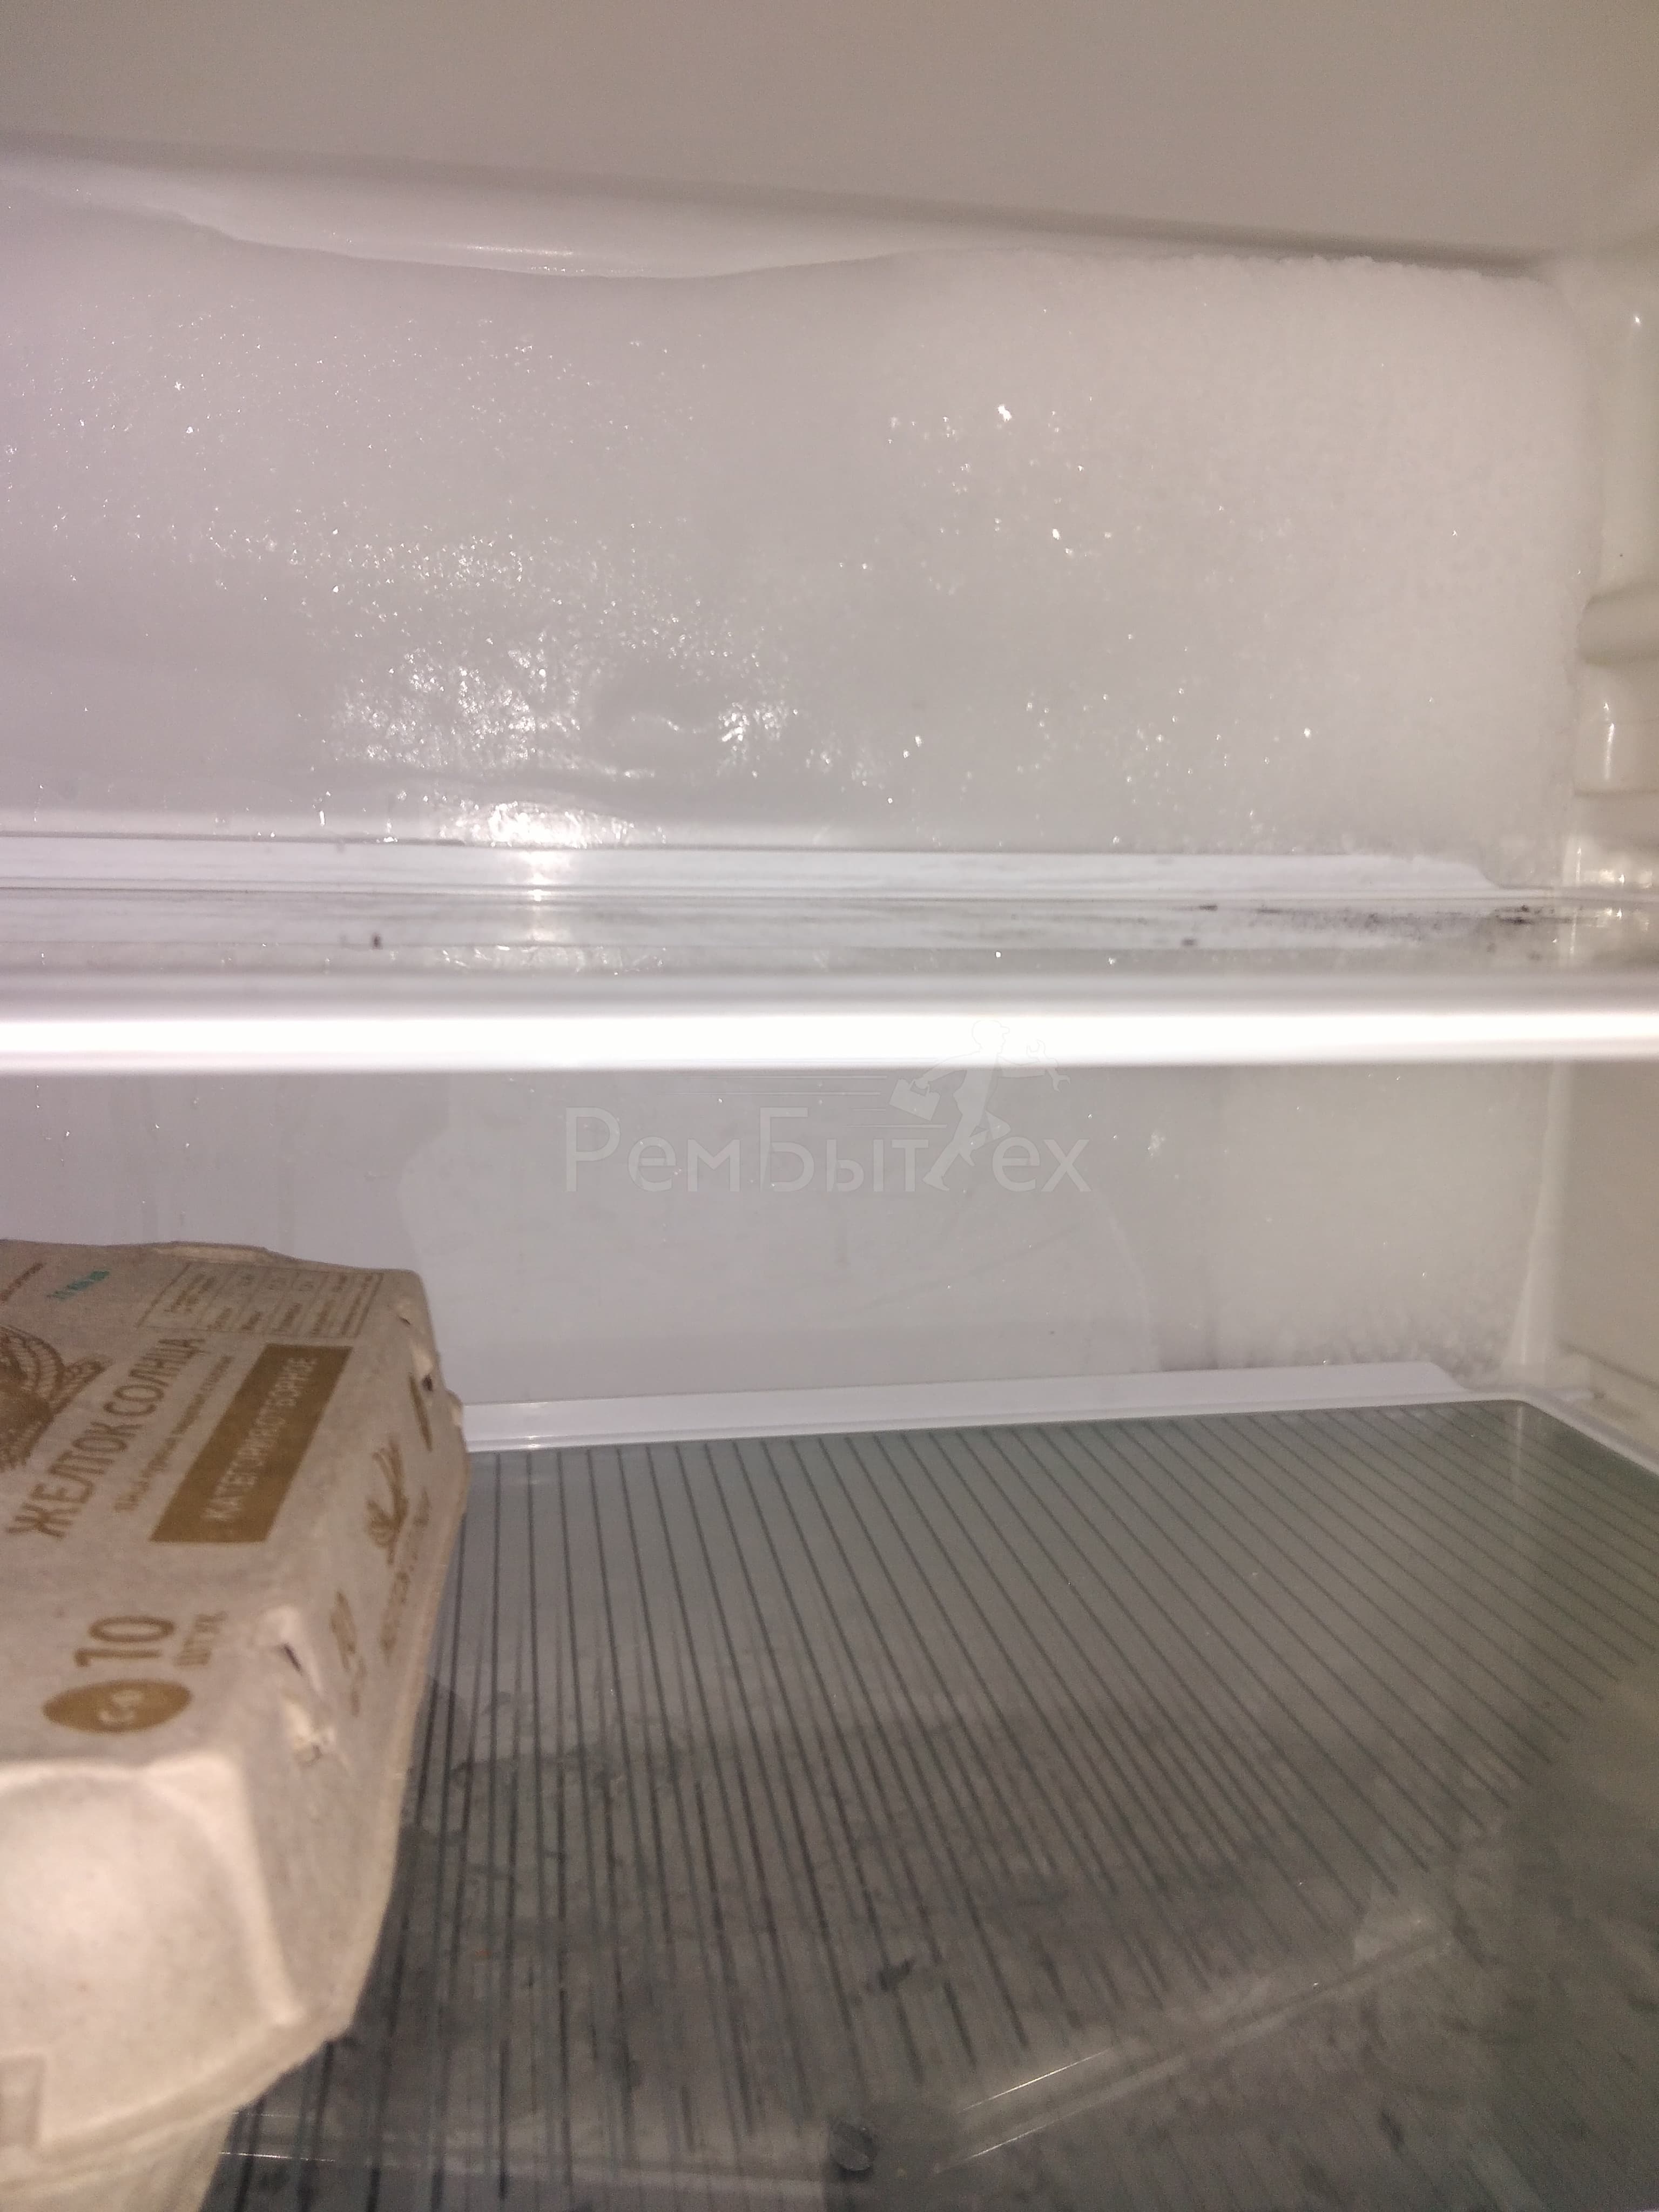 Намерзает лед на стенке холодильника